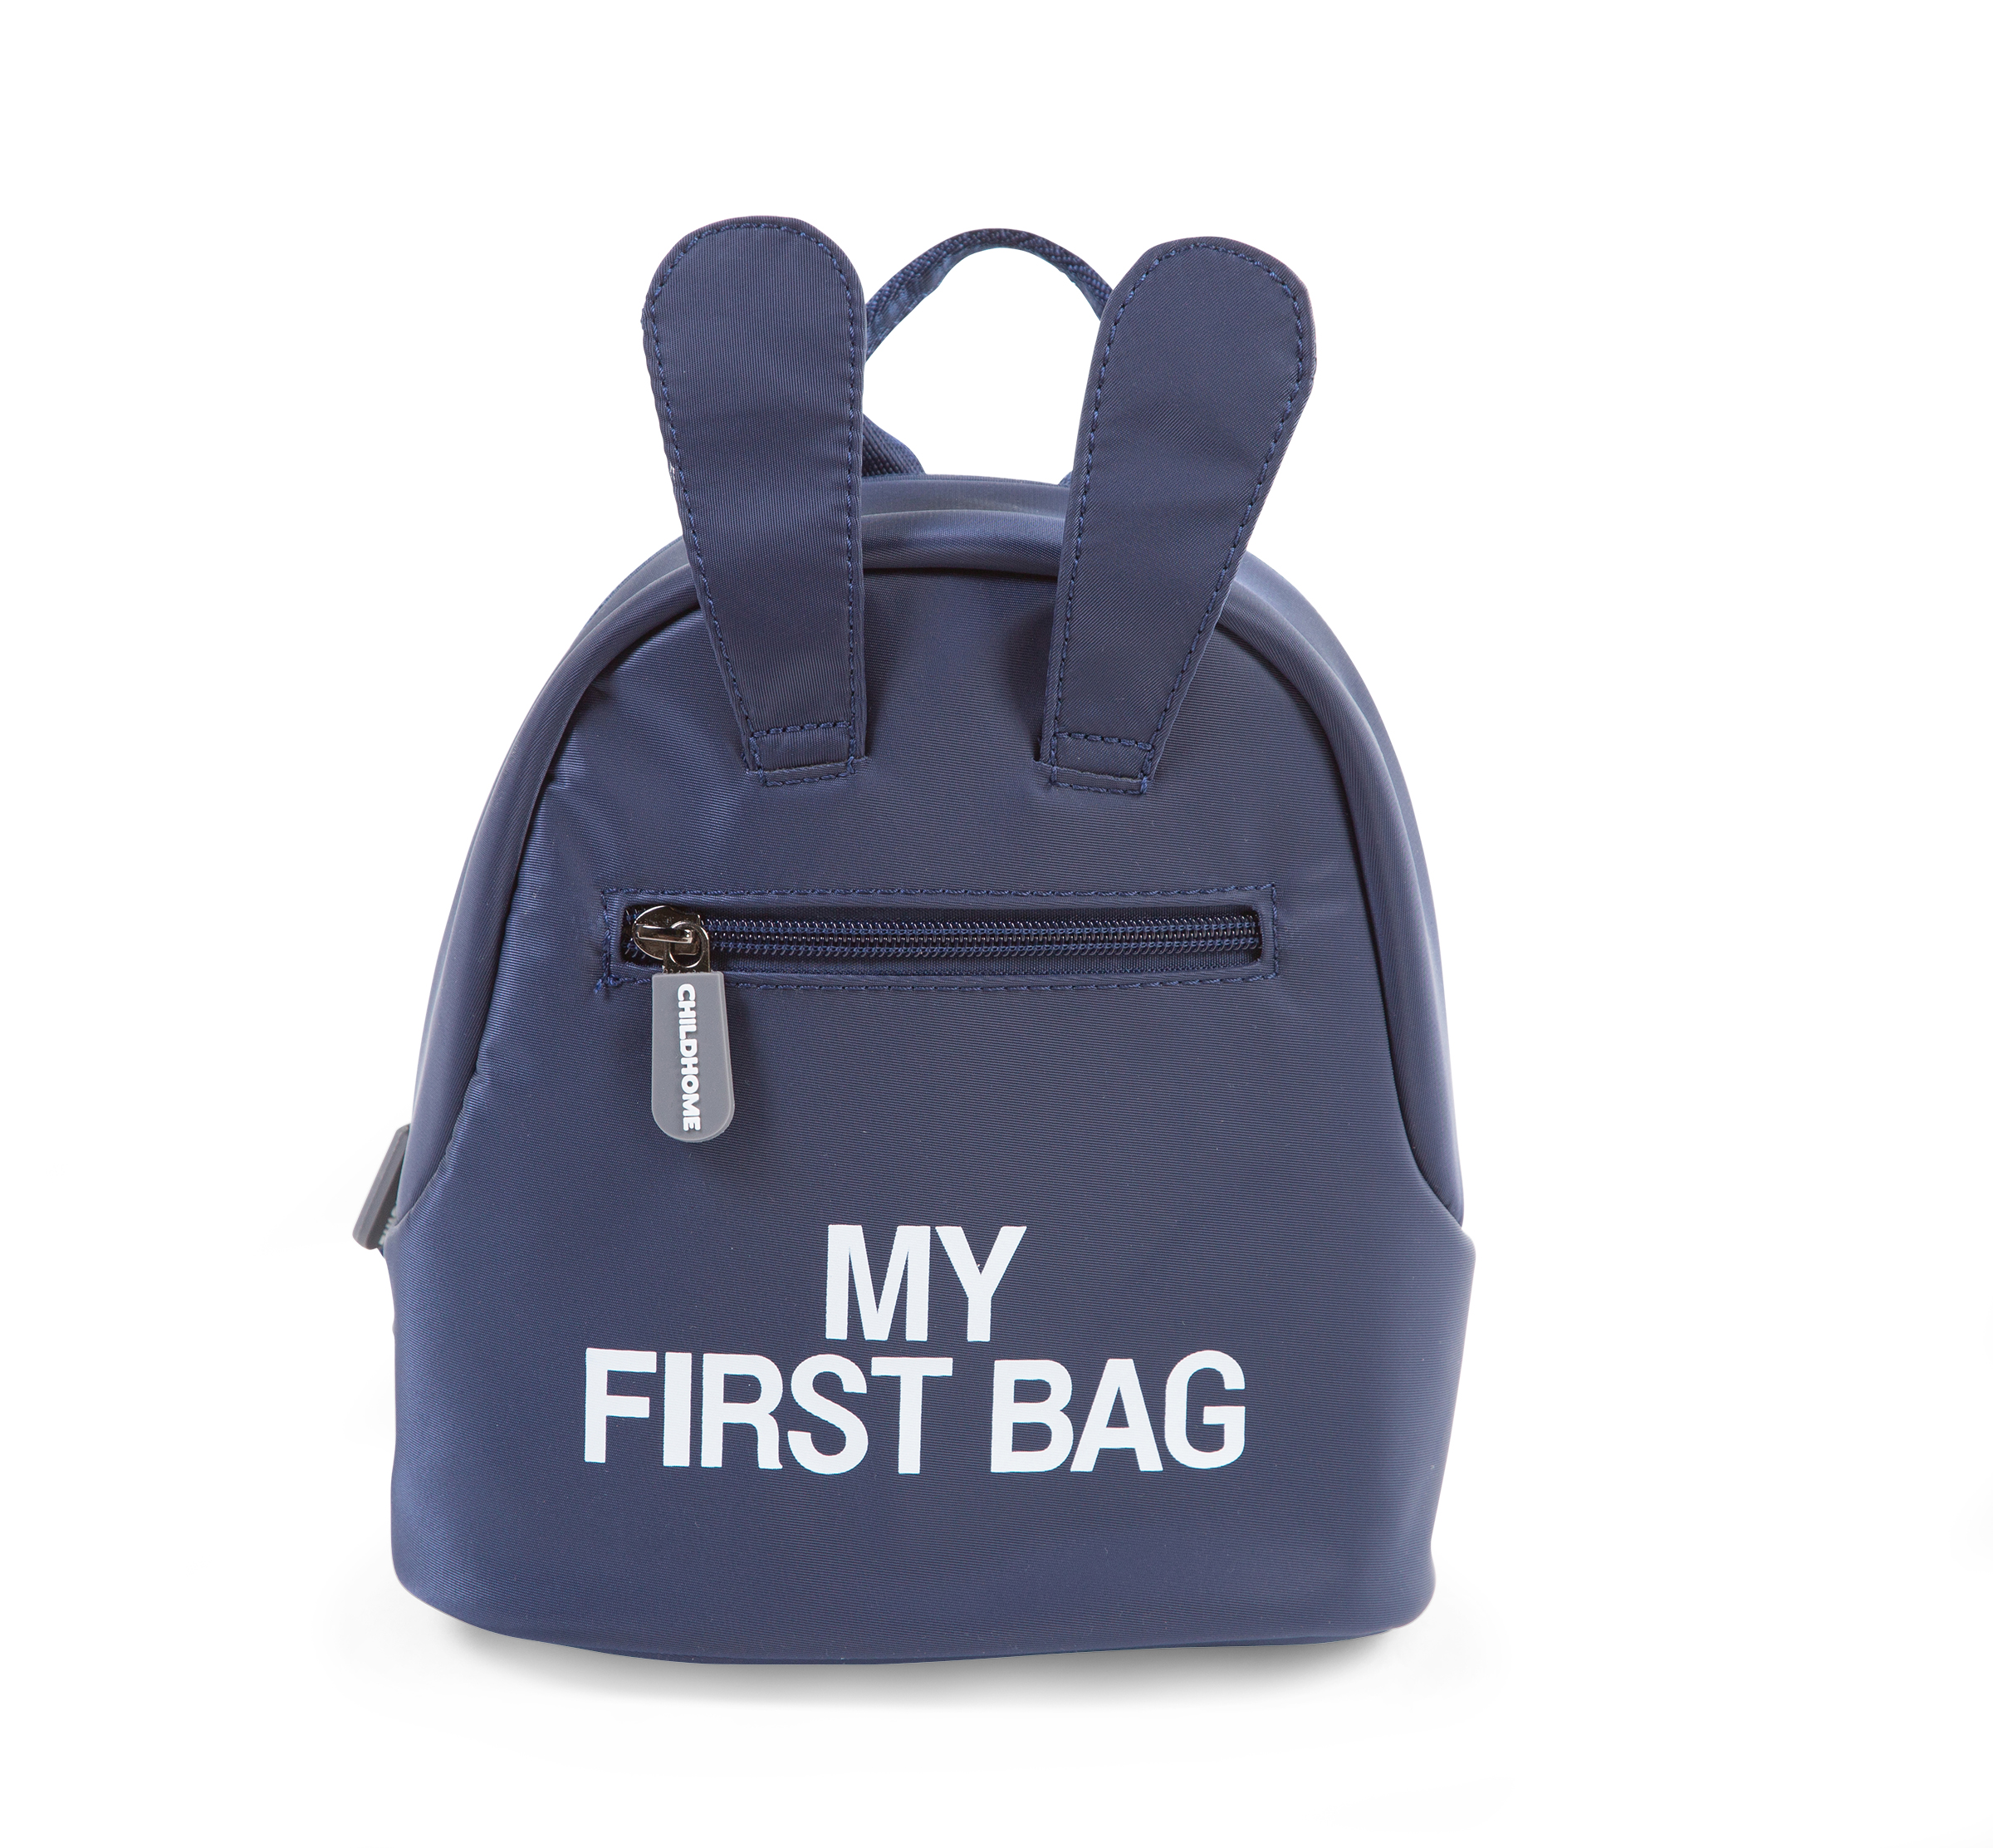 My First Bag Sac A Dos Pour Enfants - Bleu